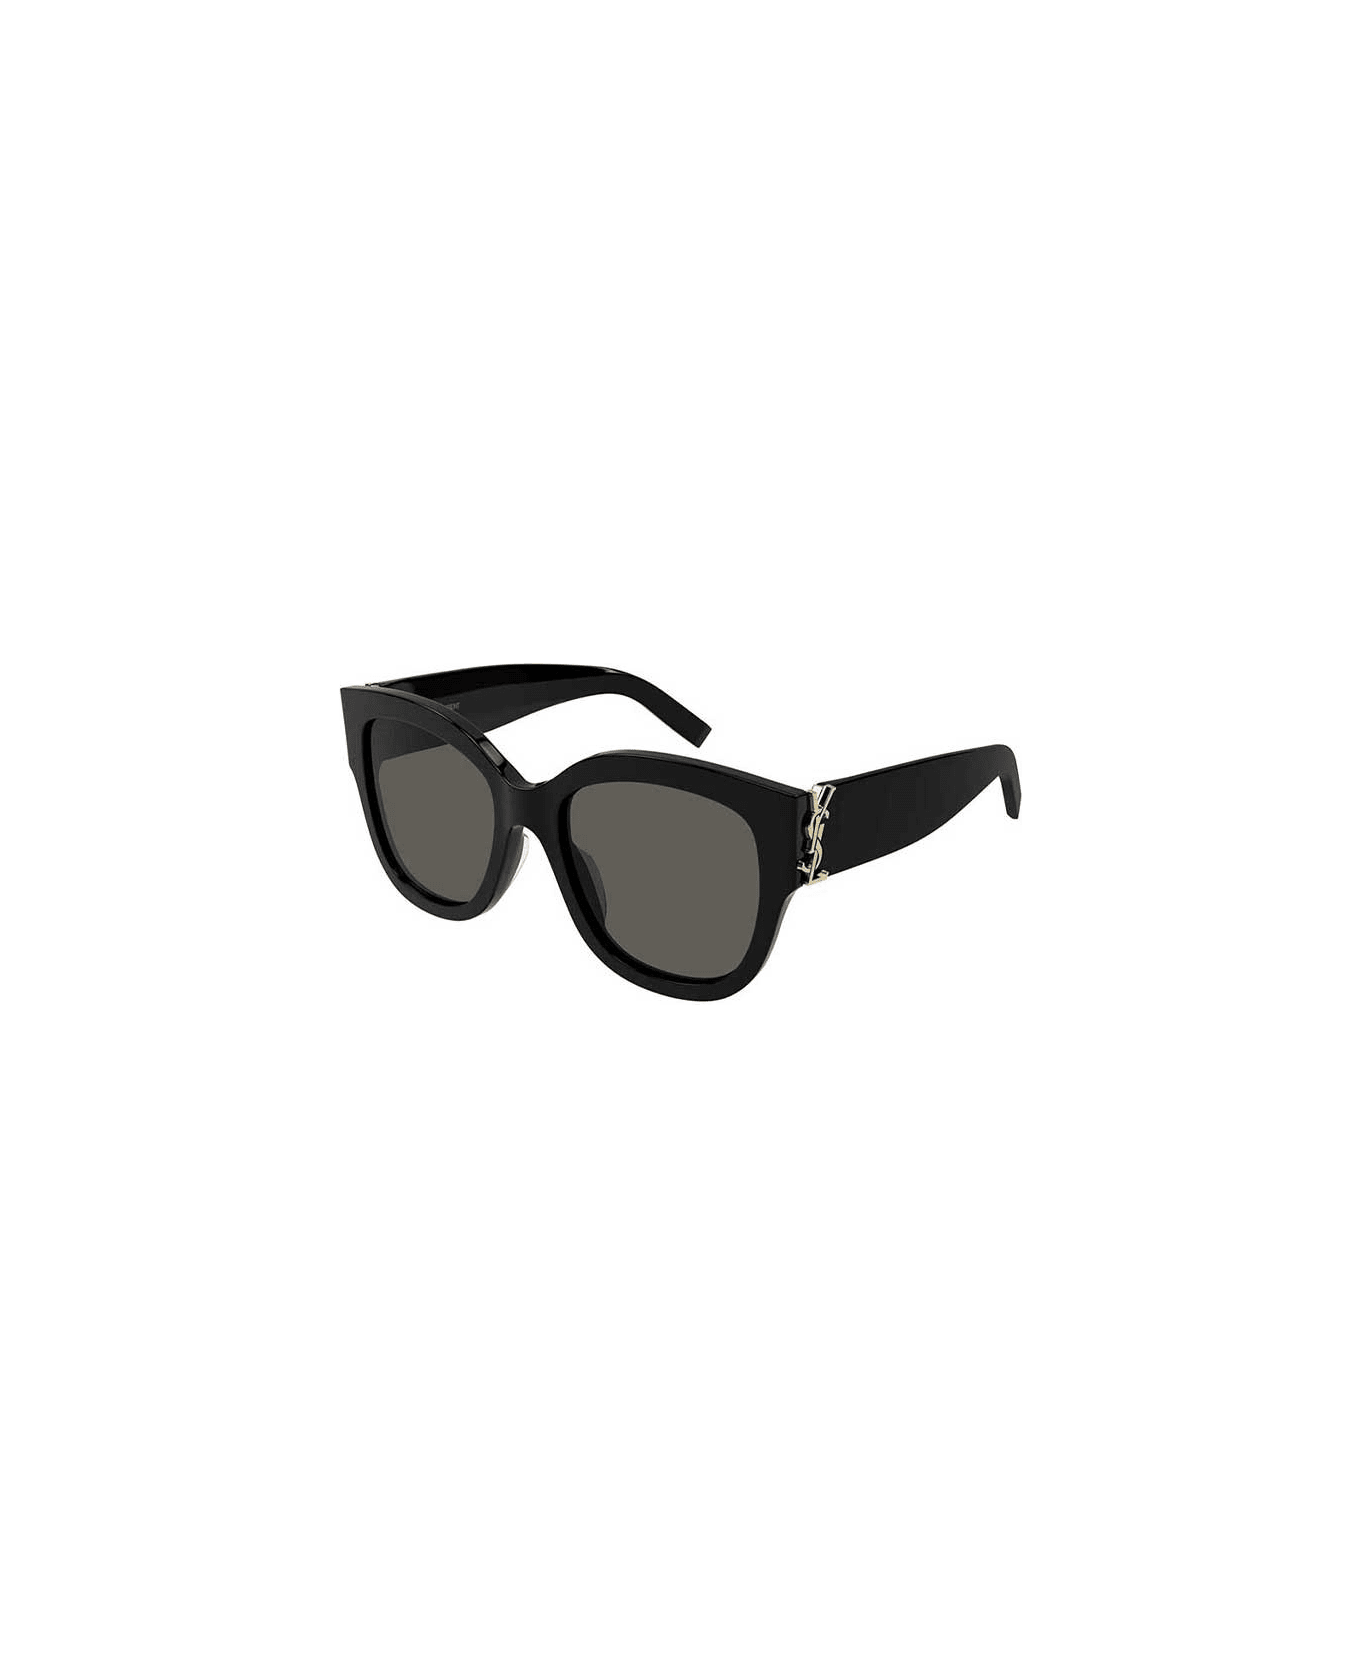 Saint Laurent Eyewear Sunglasses - Nero/Grigio